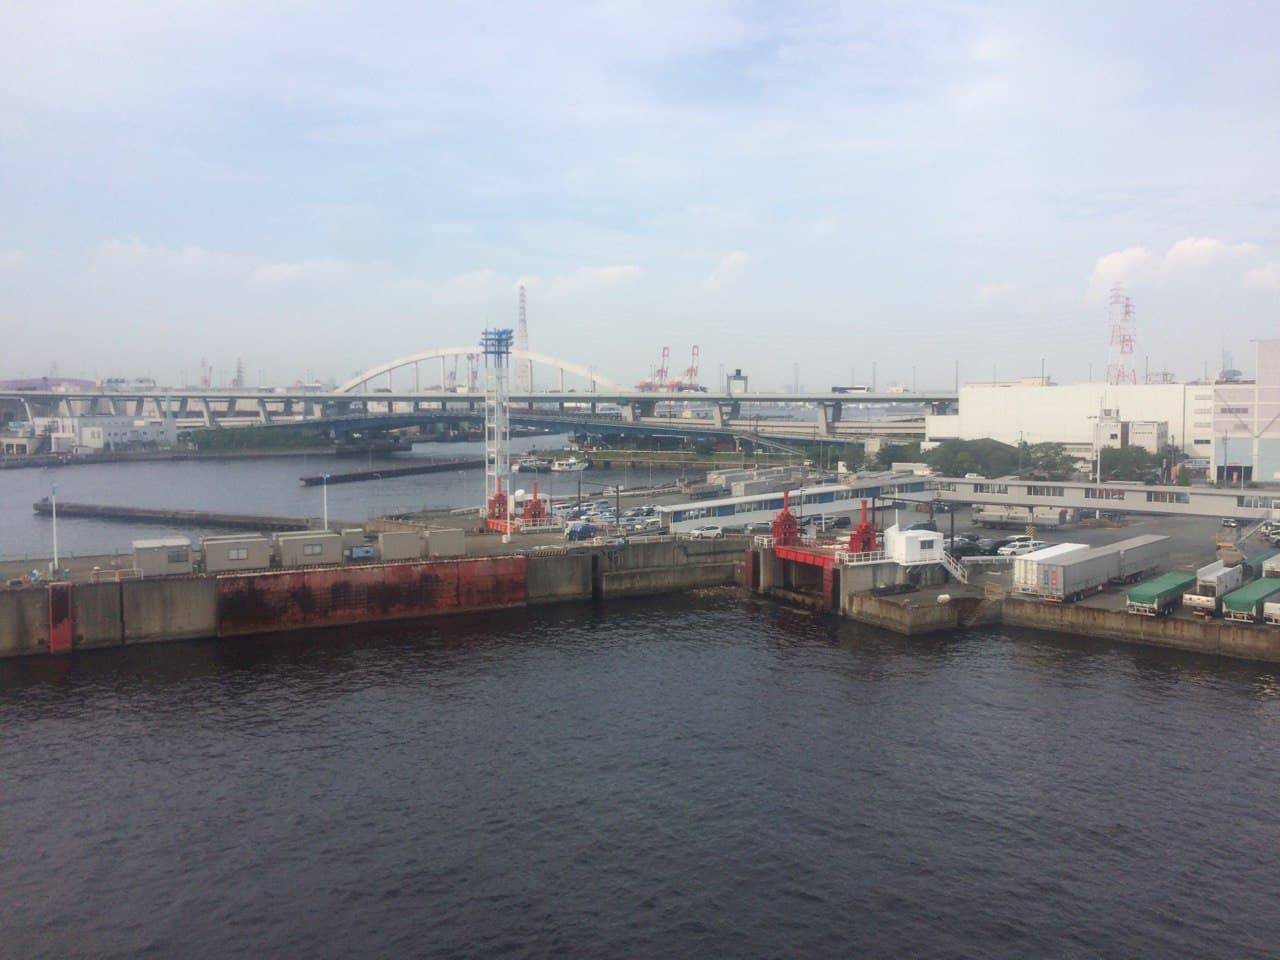 Osaka bay where we took a ship to Moji, Kyushu island